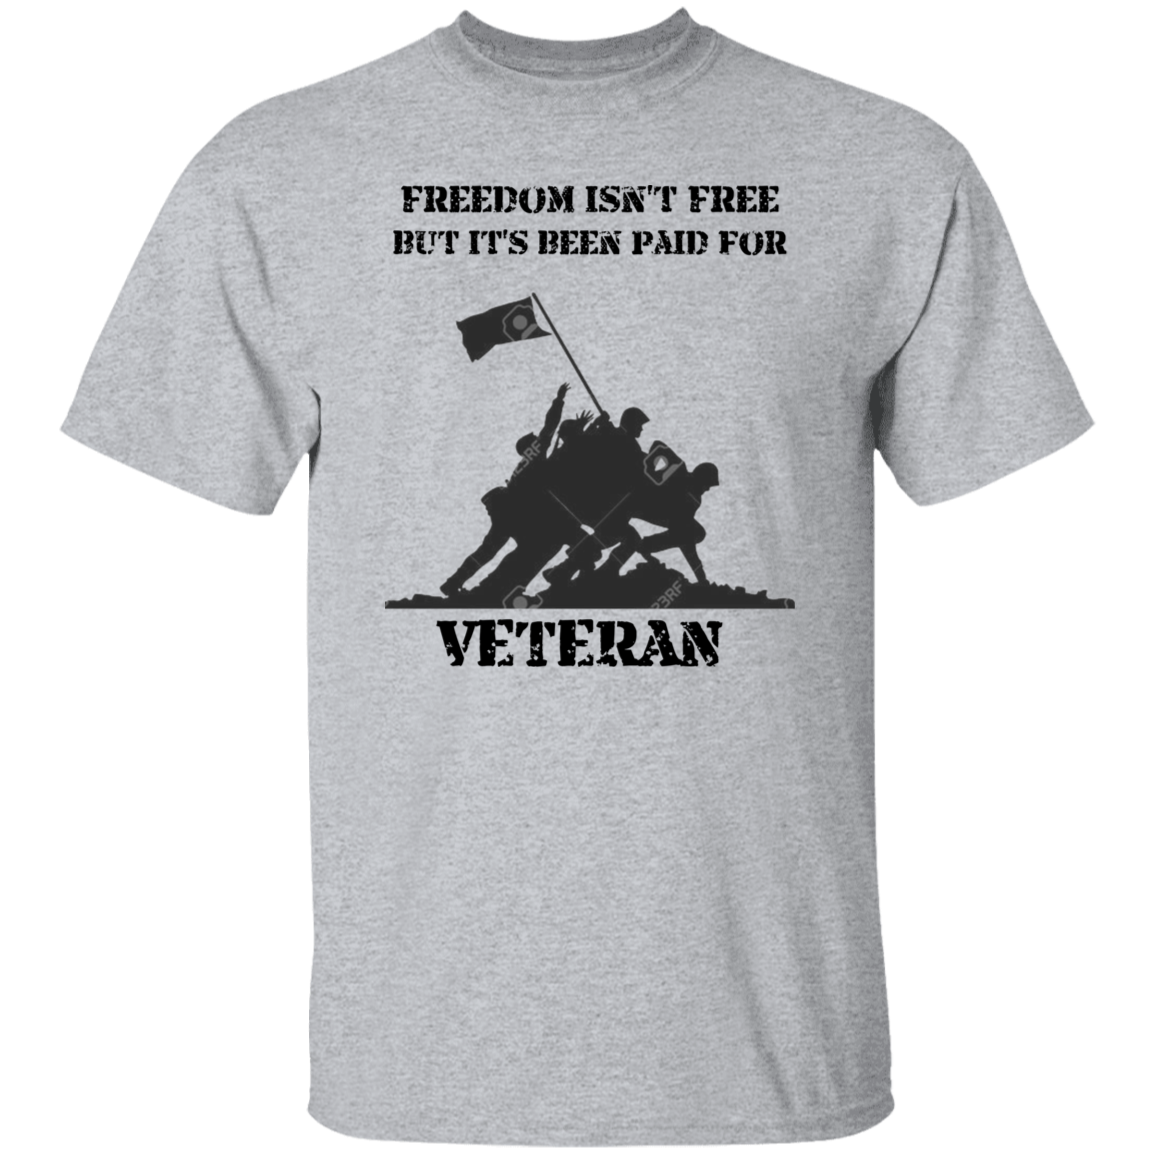 FREEDOM ISN'T FREE 5.3 oz. T-Shirt